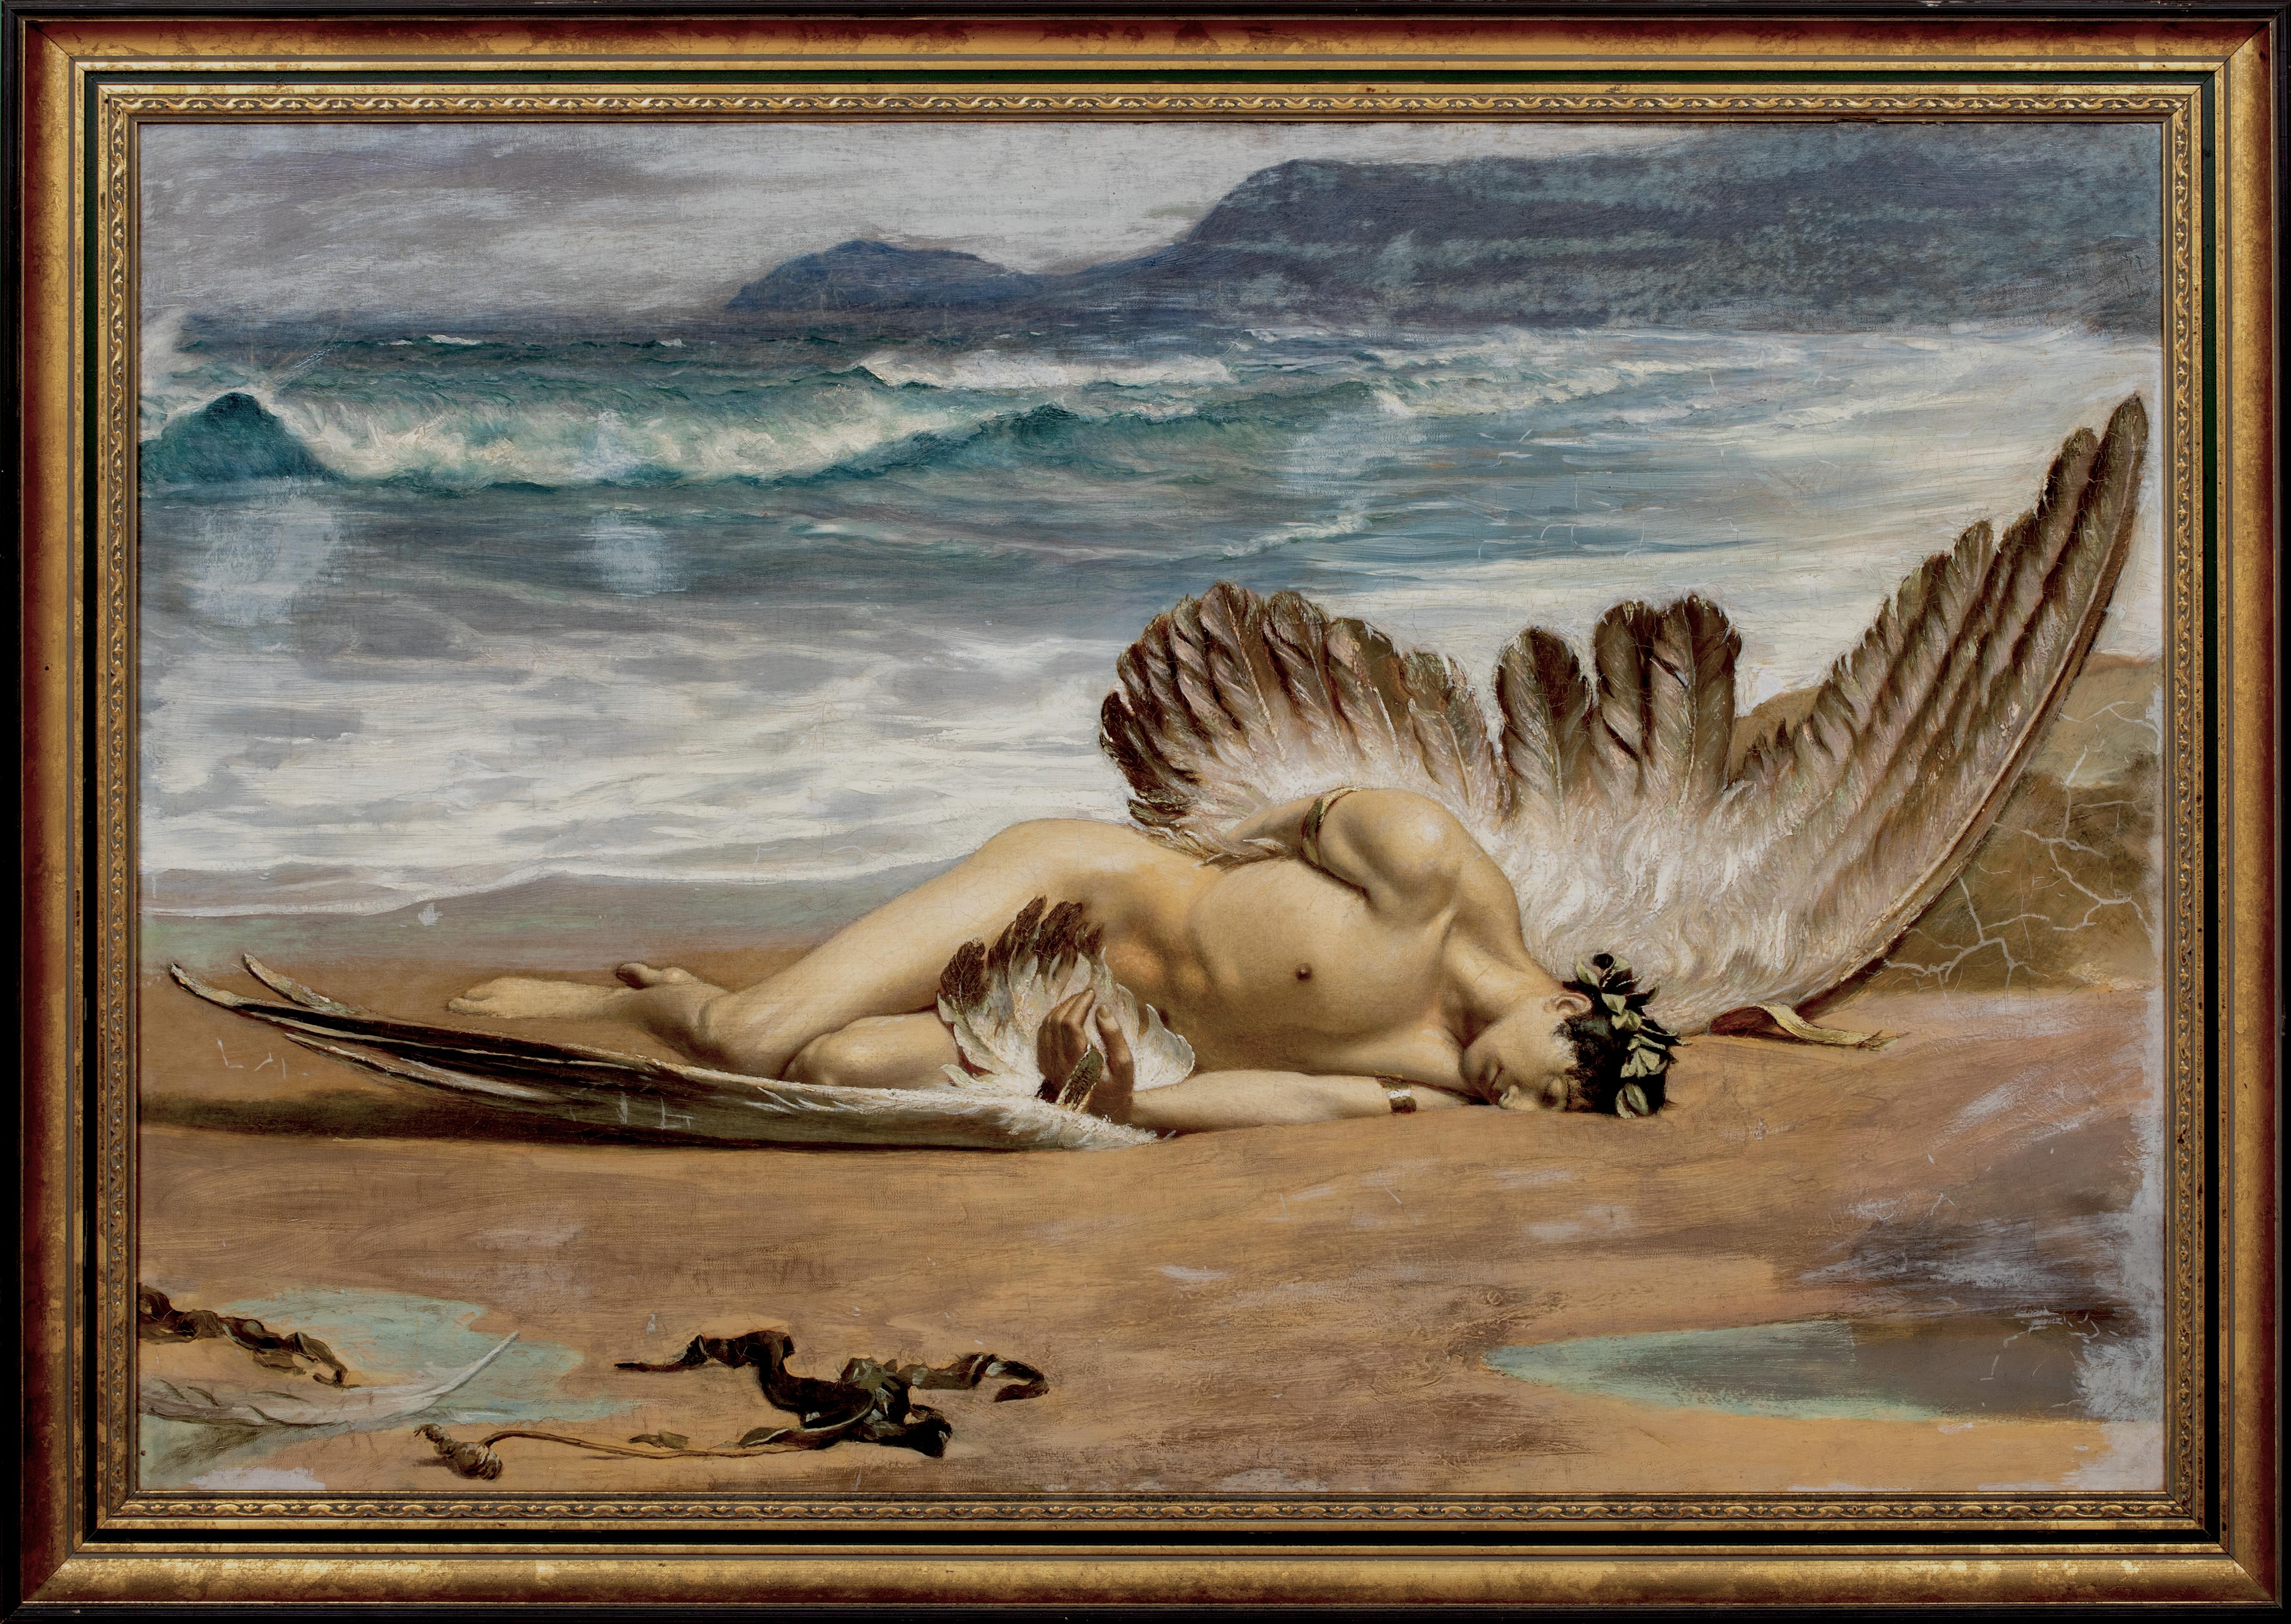 Alexandre Cabanel Portrait Painting - The Death Of Icarus, 19th Century - Alexandre CABANEL (1823-1889)